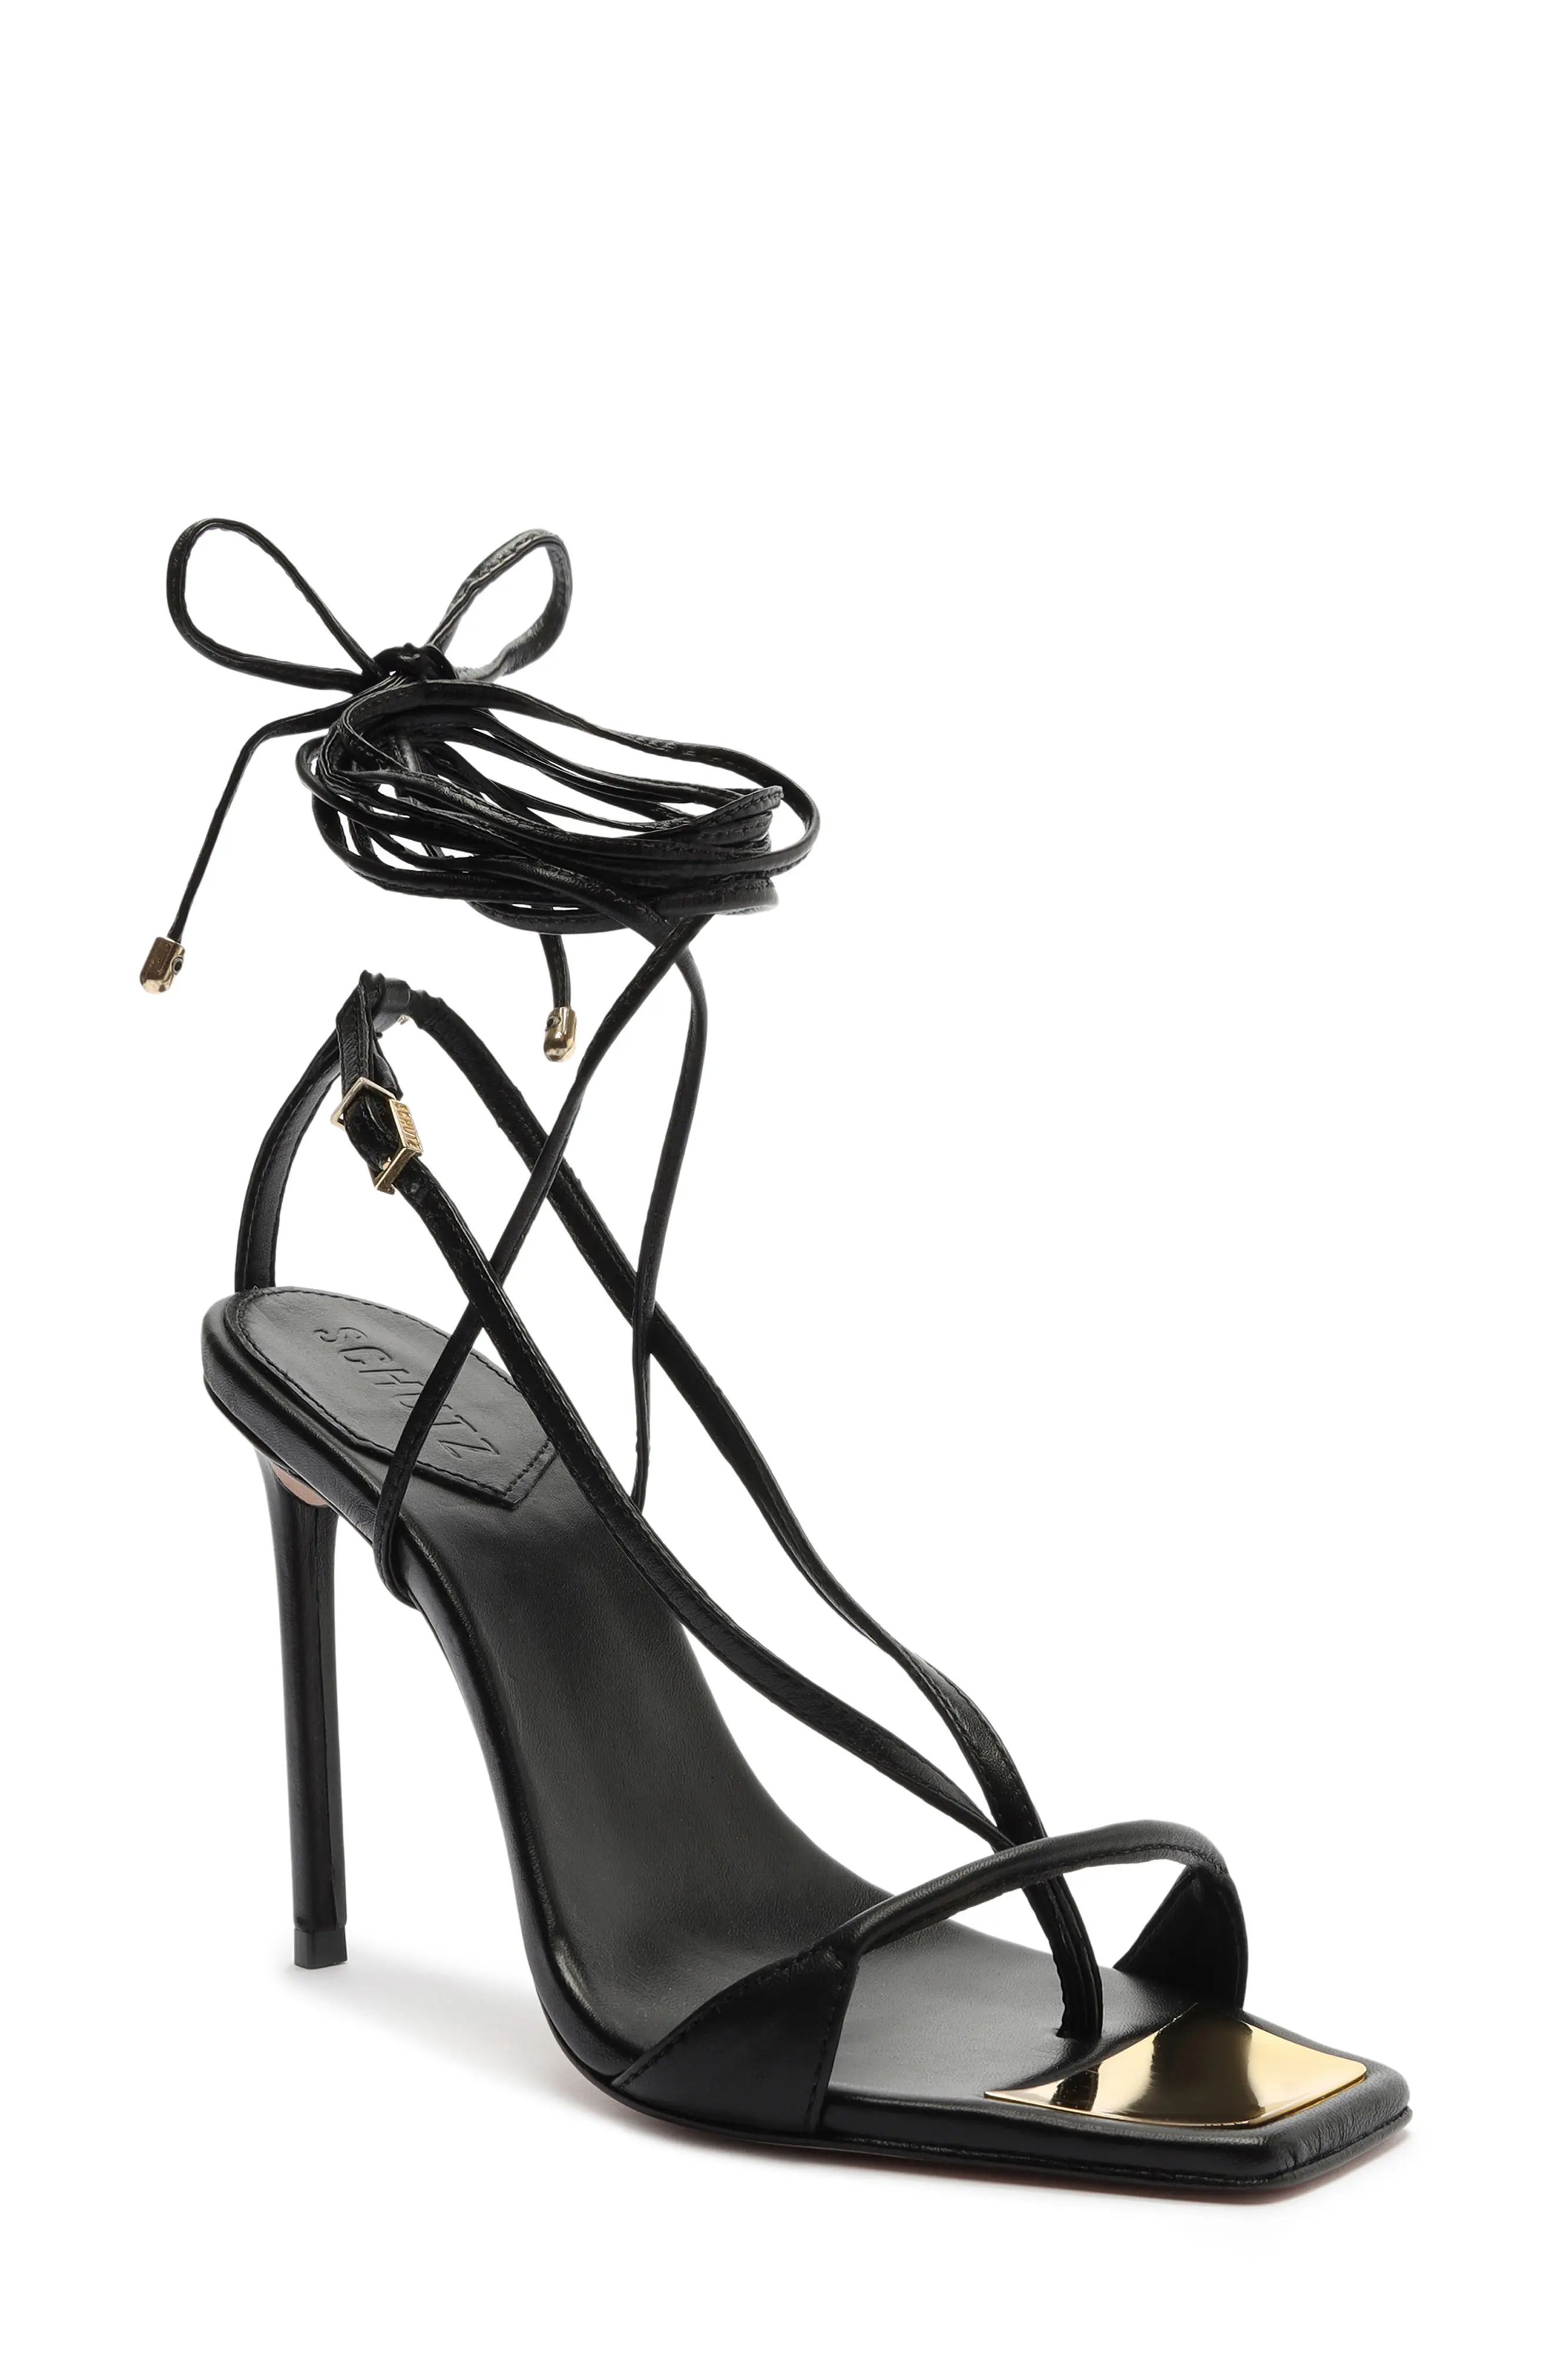 Schutz Vikki Ankle Tie Sandal, Size 7 in Black at Nordstrom | Nordstrom